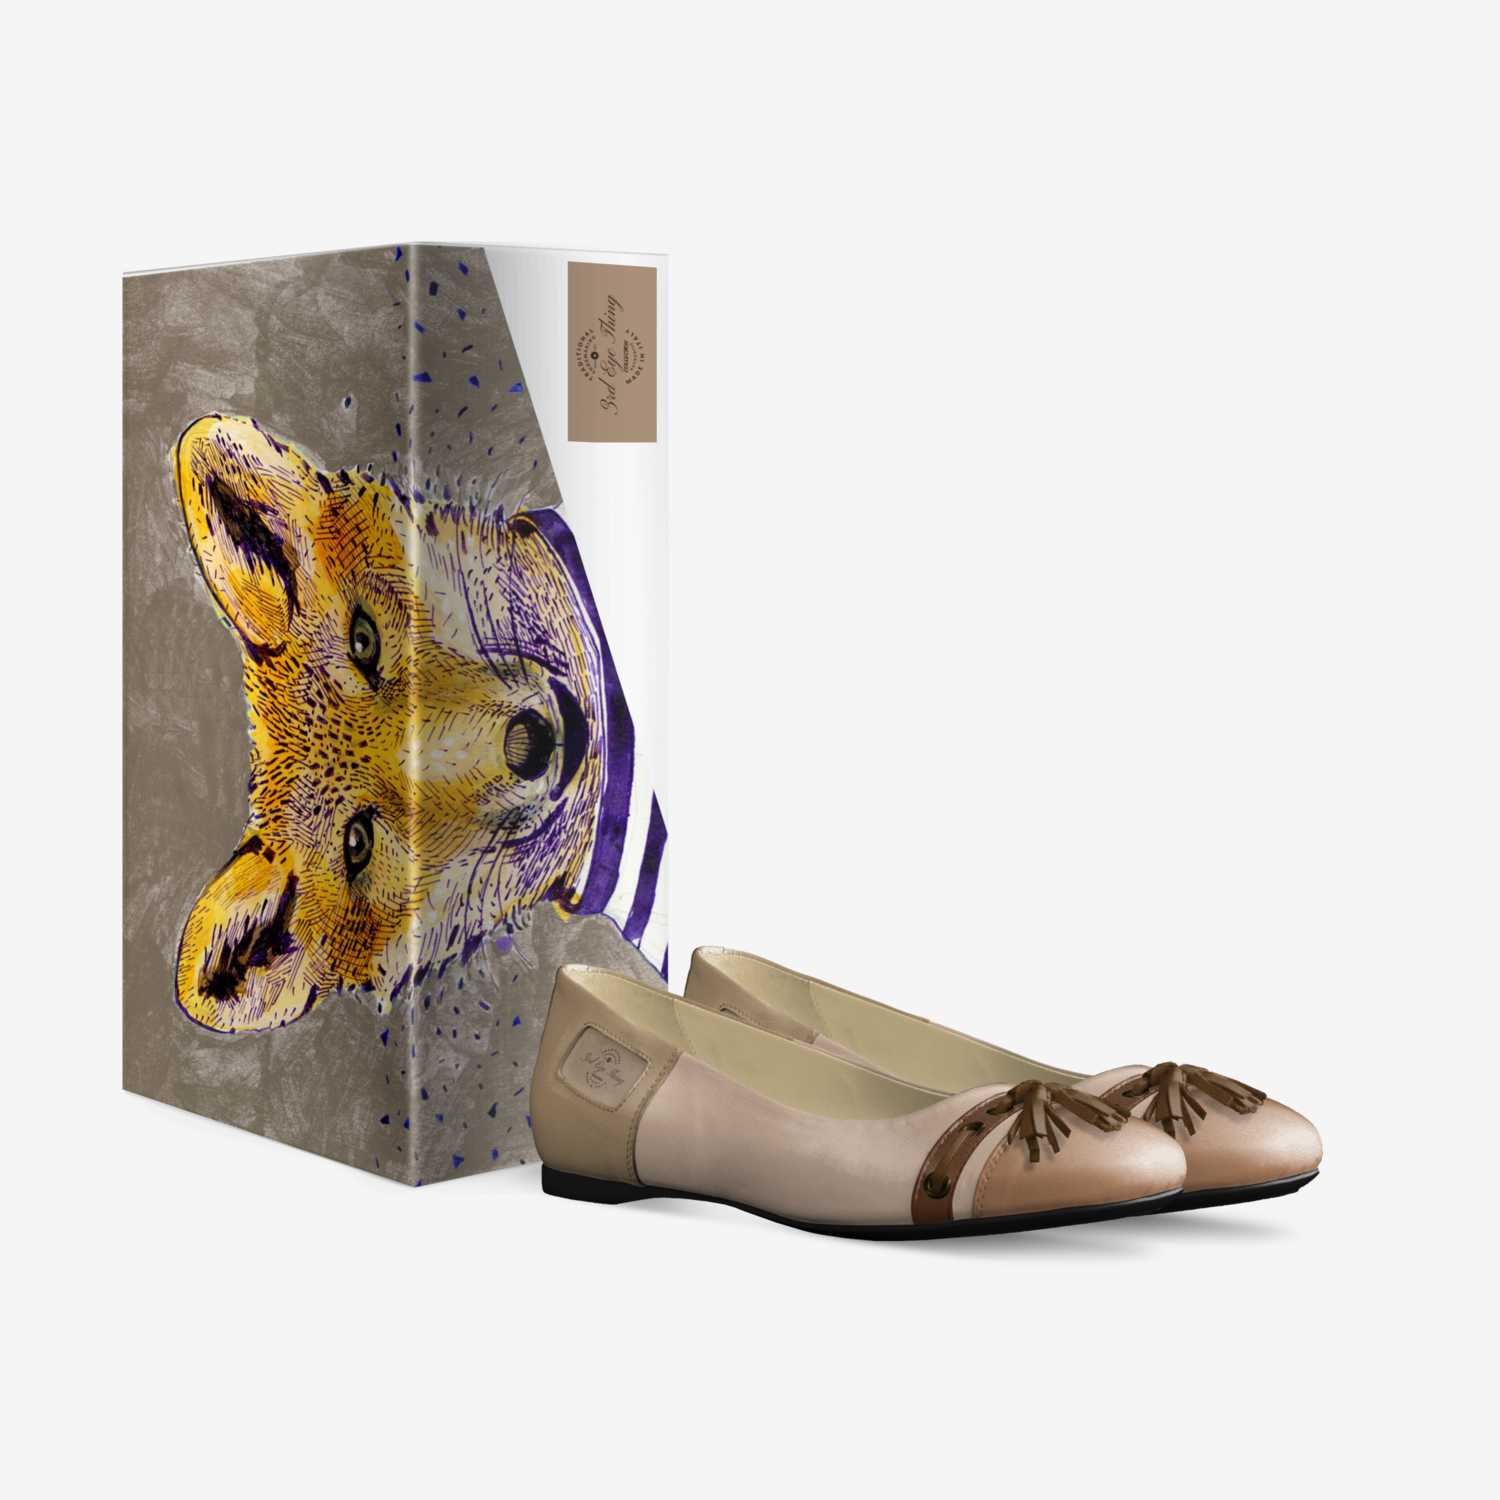 Macia custom made in Italy shoes by Daryl Hayott | Box view